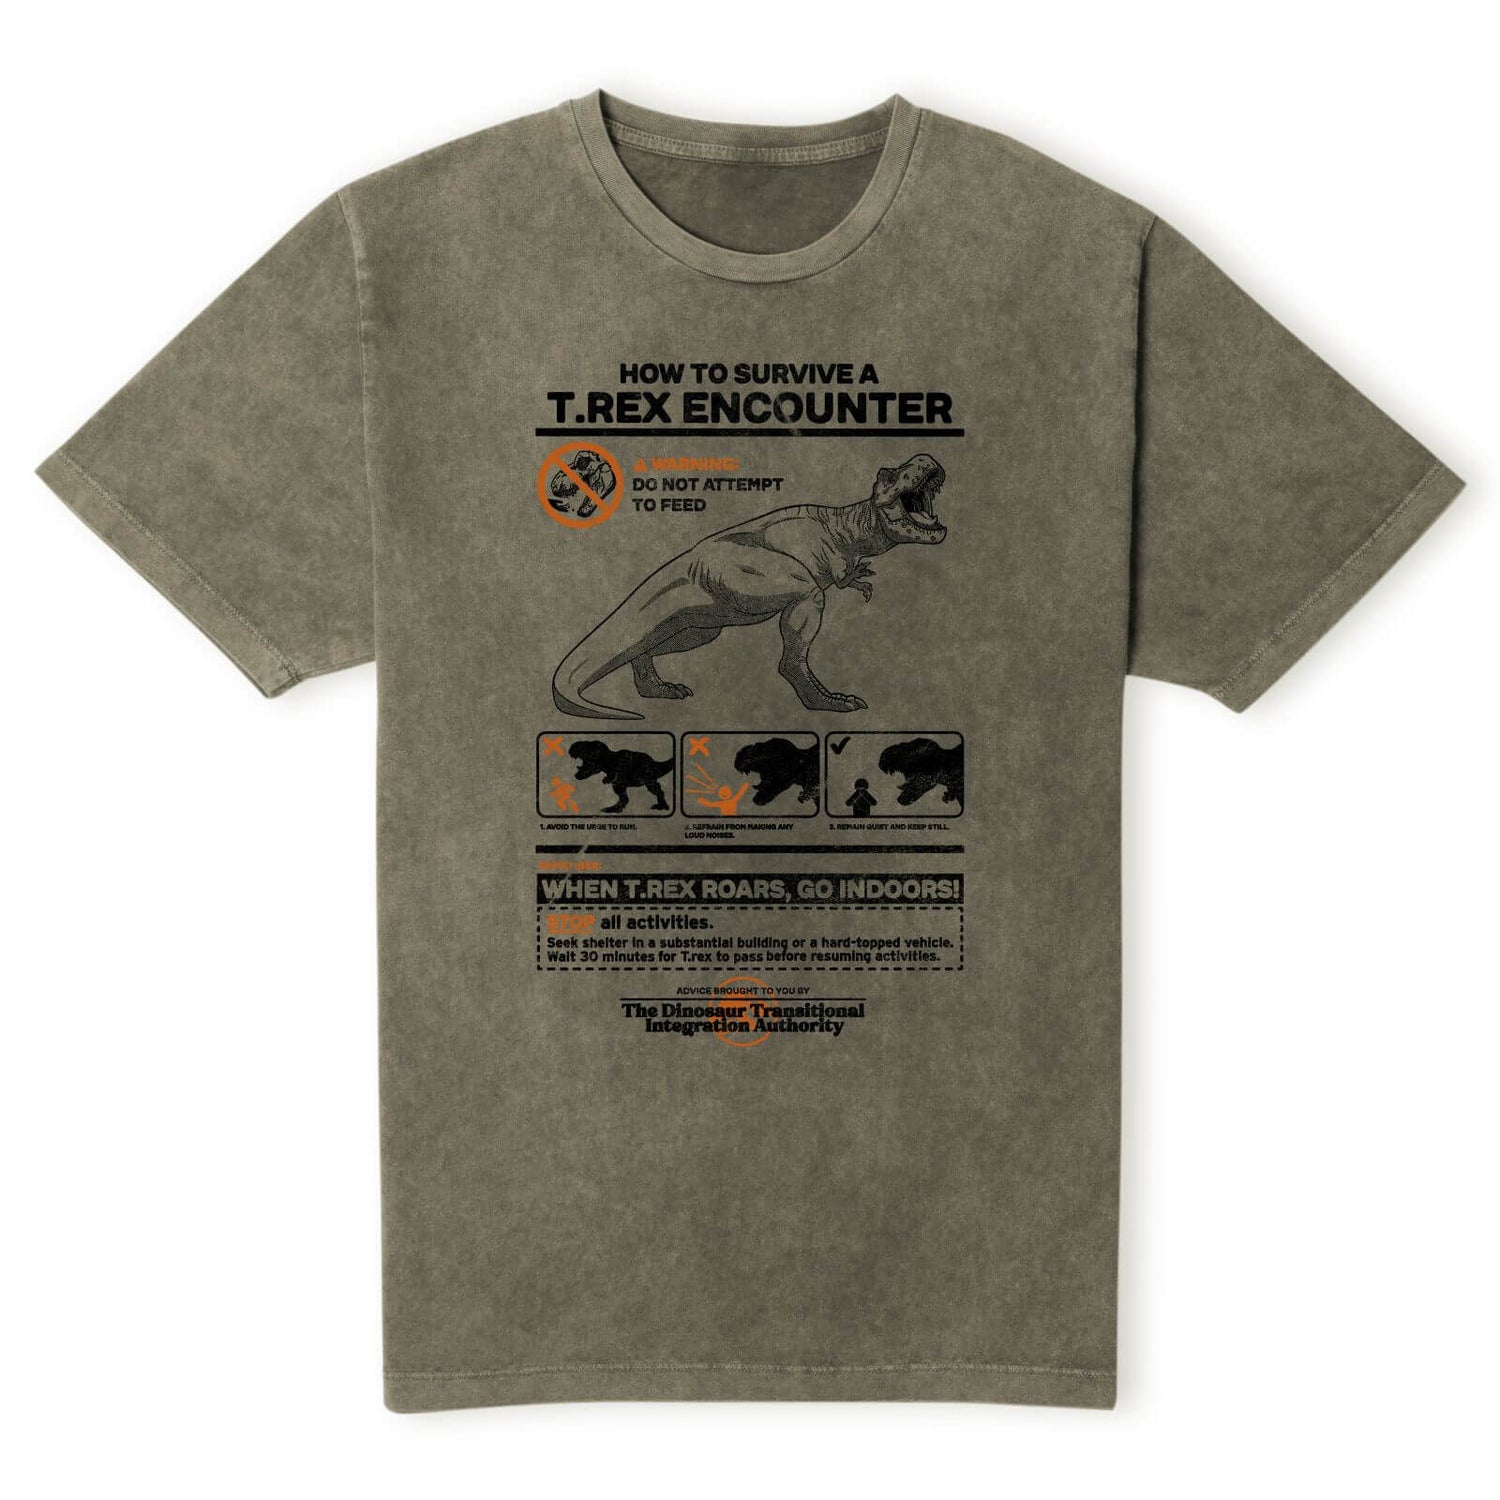 Jurassic World T-Rex Encounter Survival Guide Unisex T-Shirt - Khaki Acid Wash